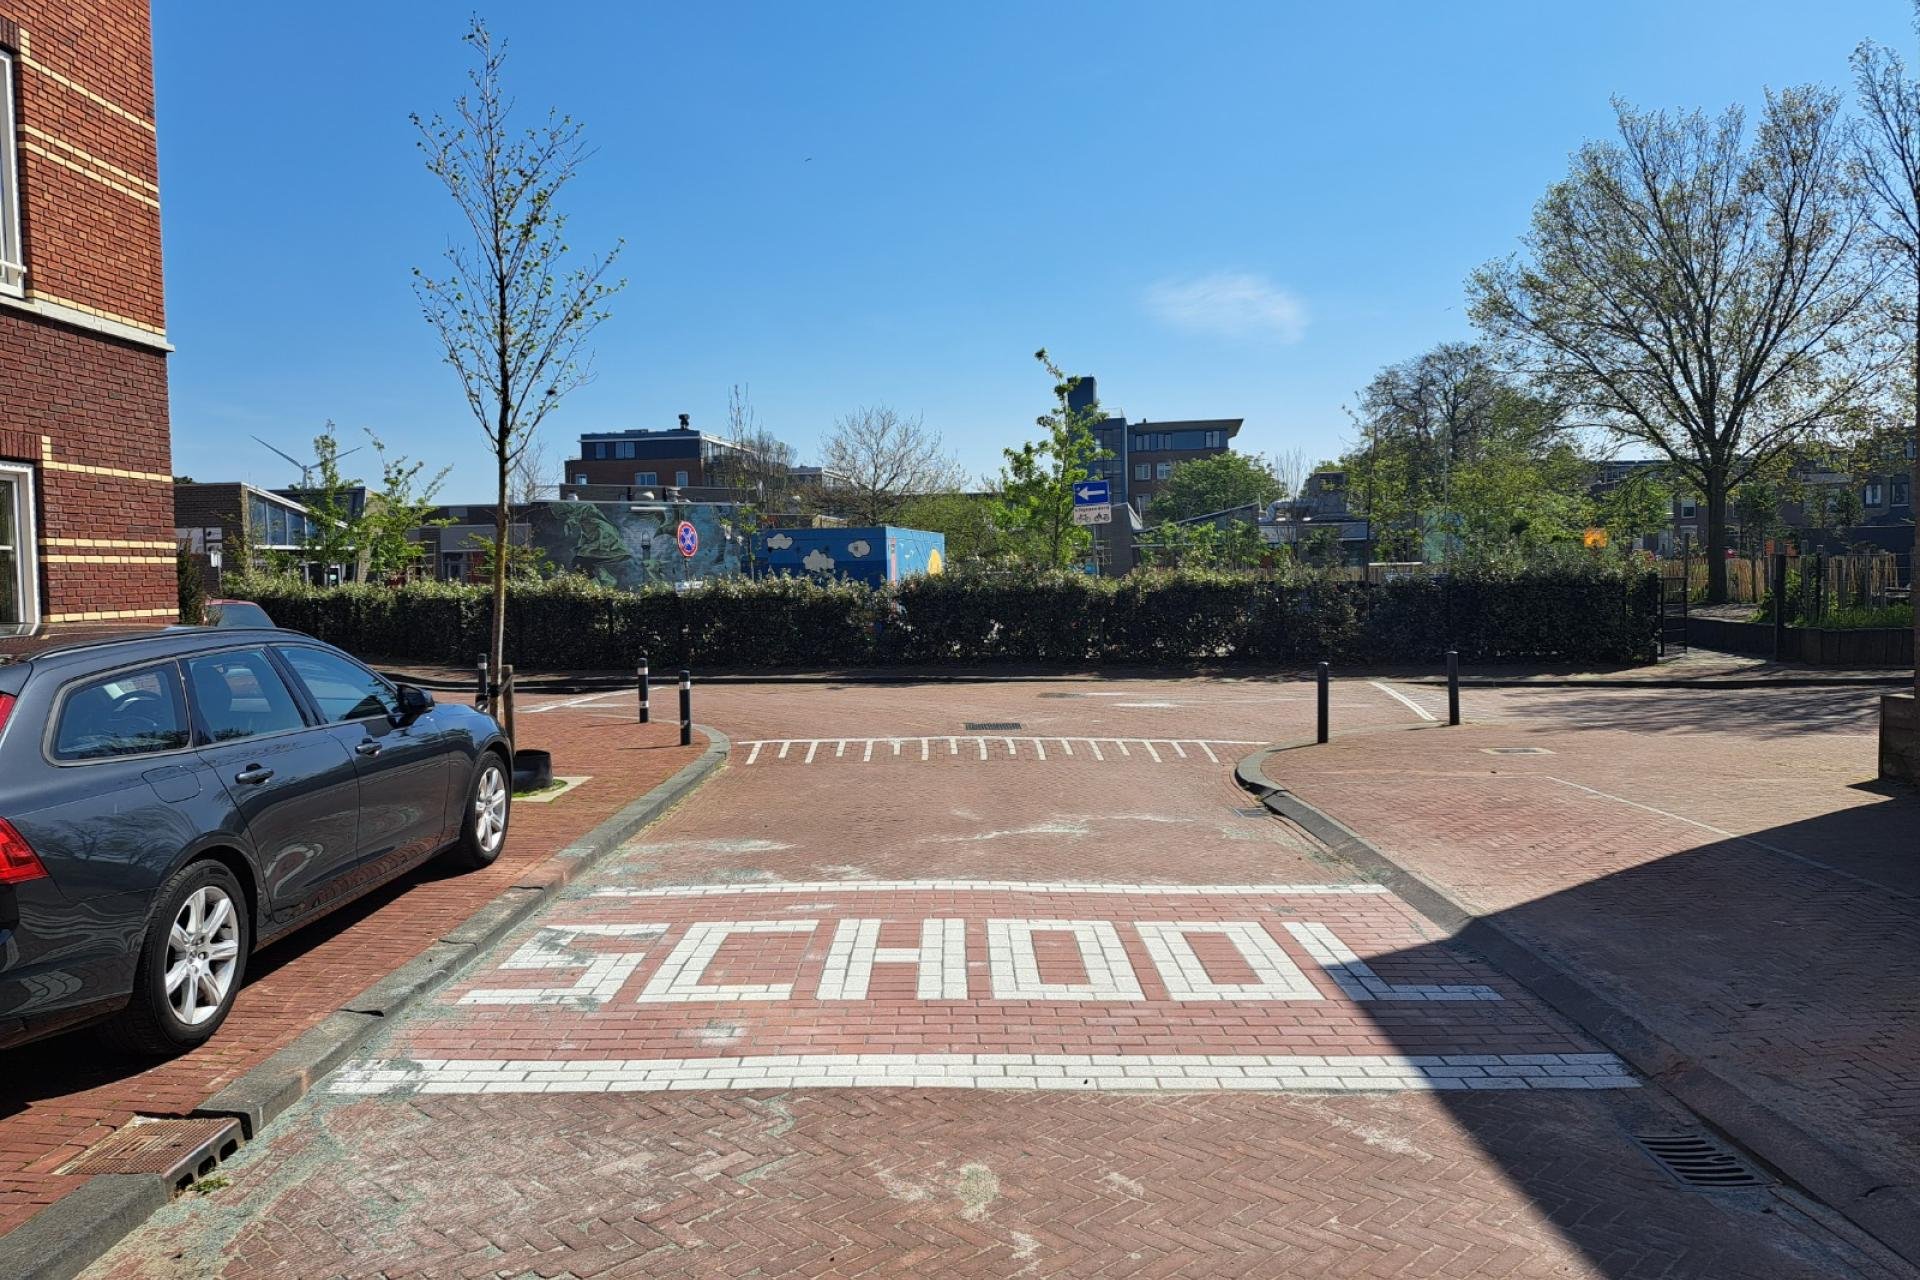 straat met het woord school in witte letters in het wegdek